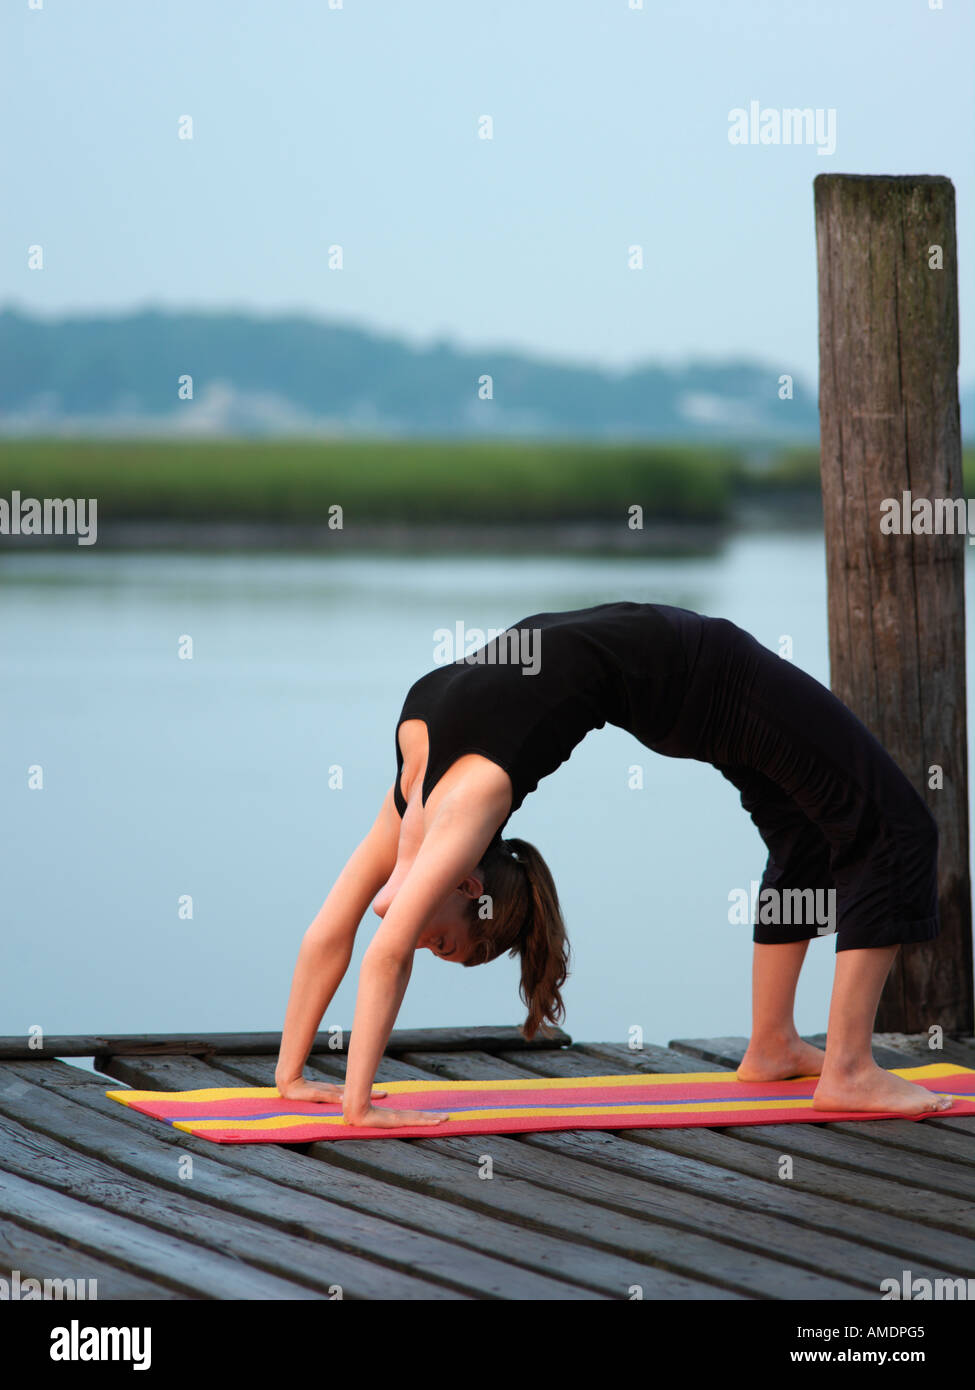 Woman doing yoga bridge position early morning on dock Virginia Beach VA Stock Photo